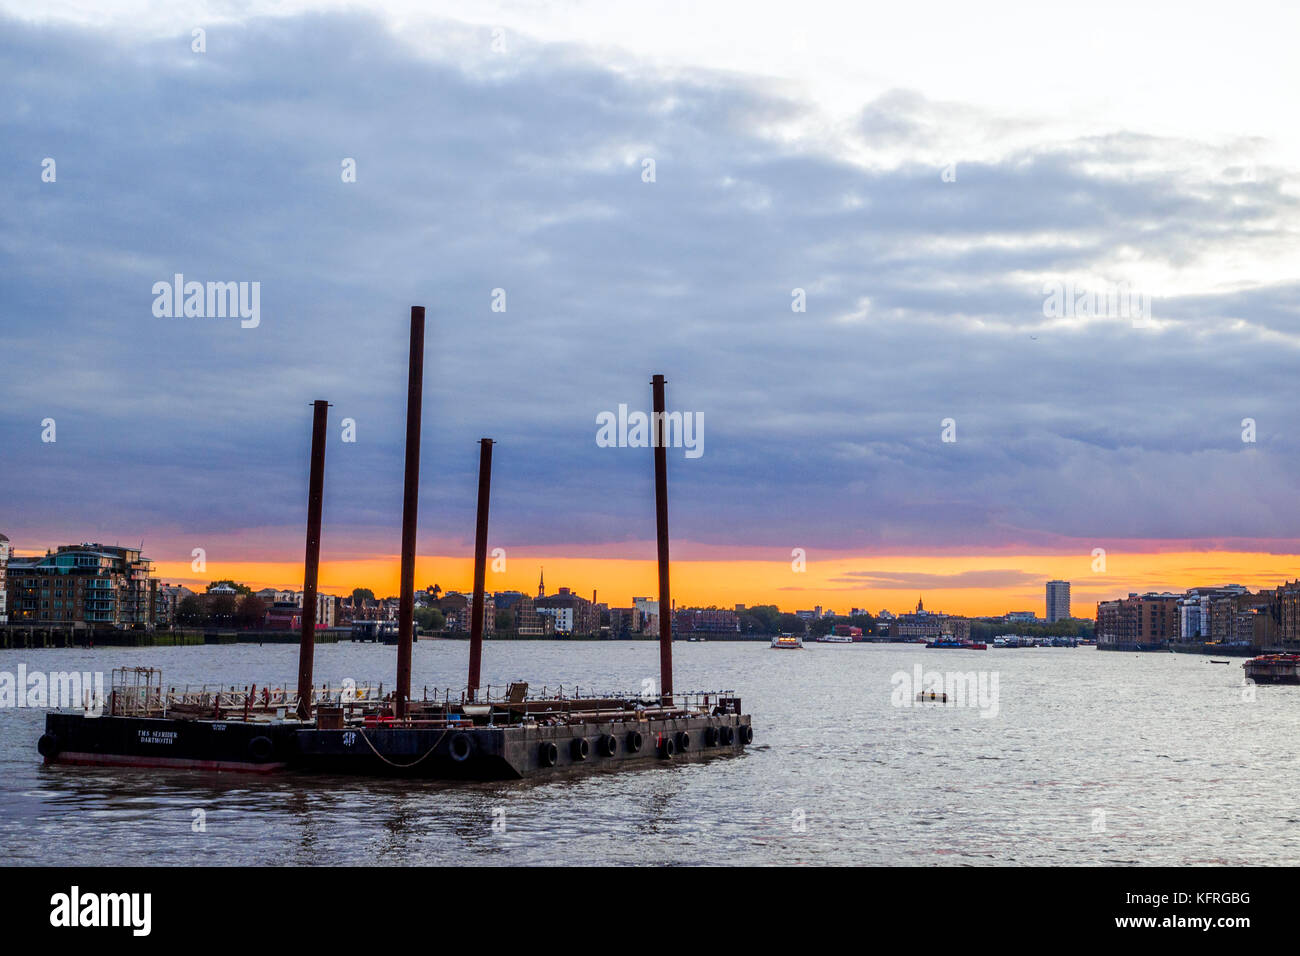 Barge en el río Támesis - Londres, Inglaterra Foto de stock